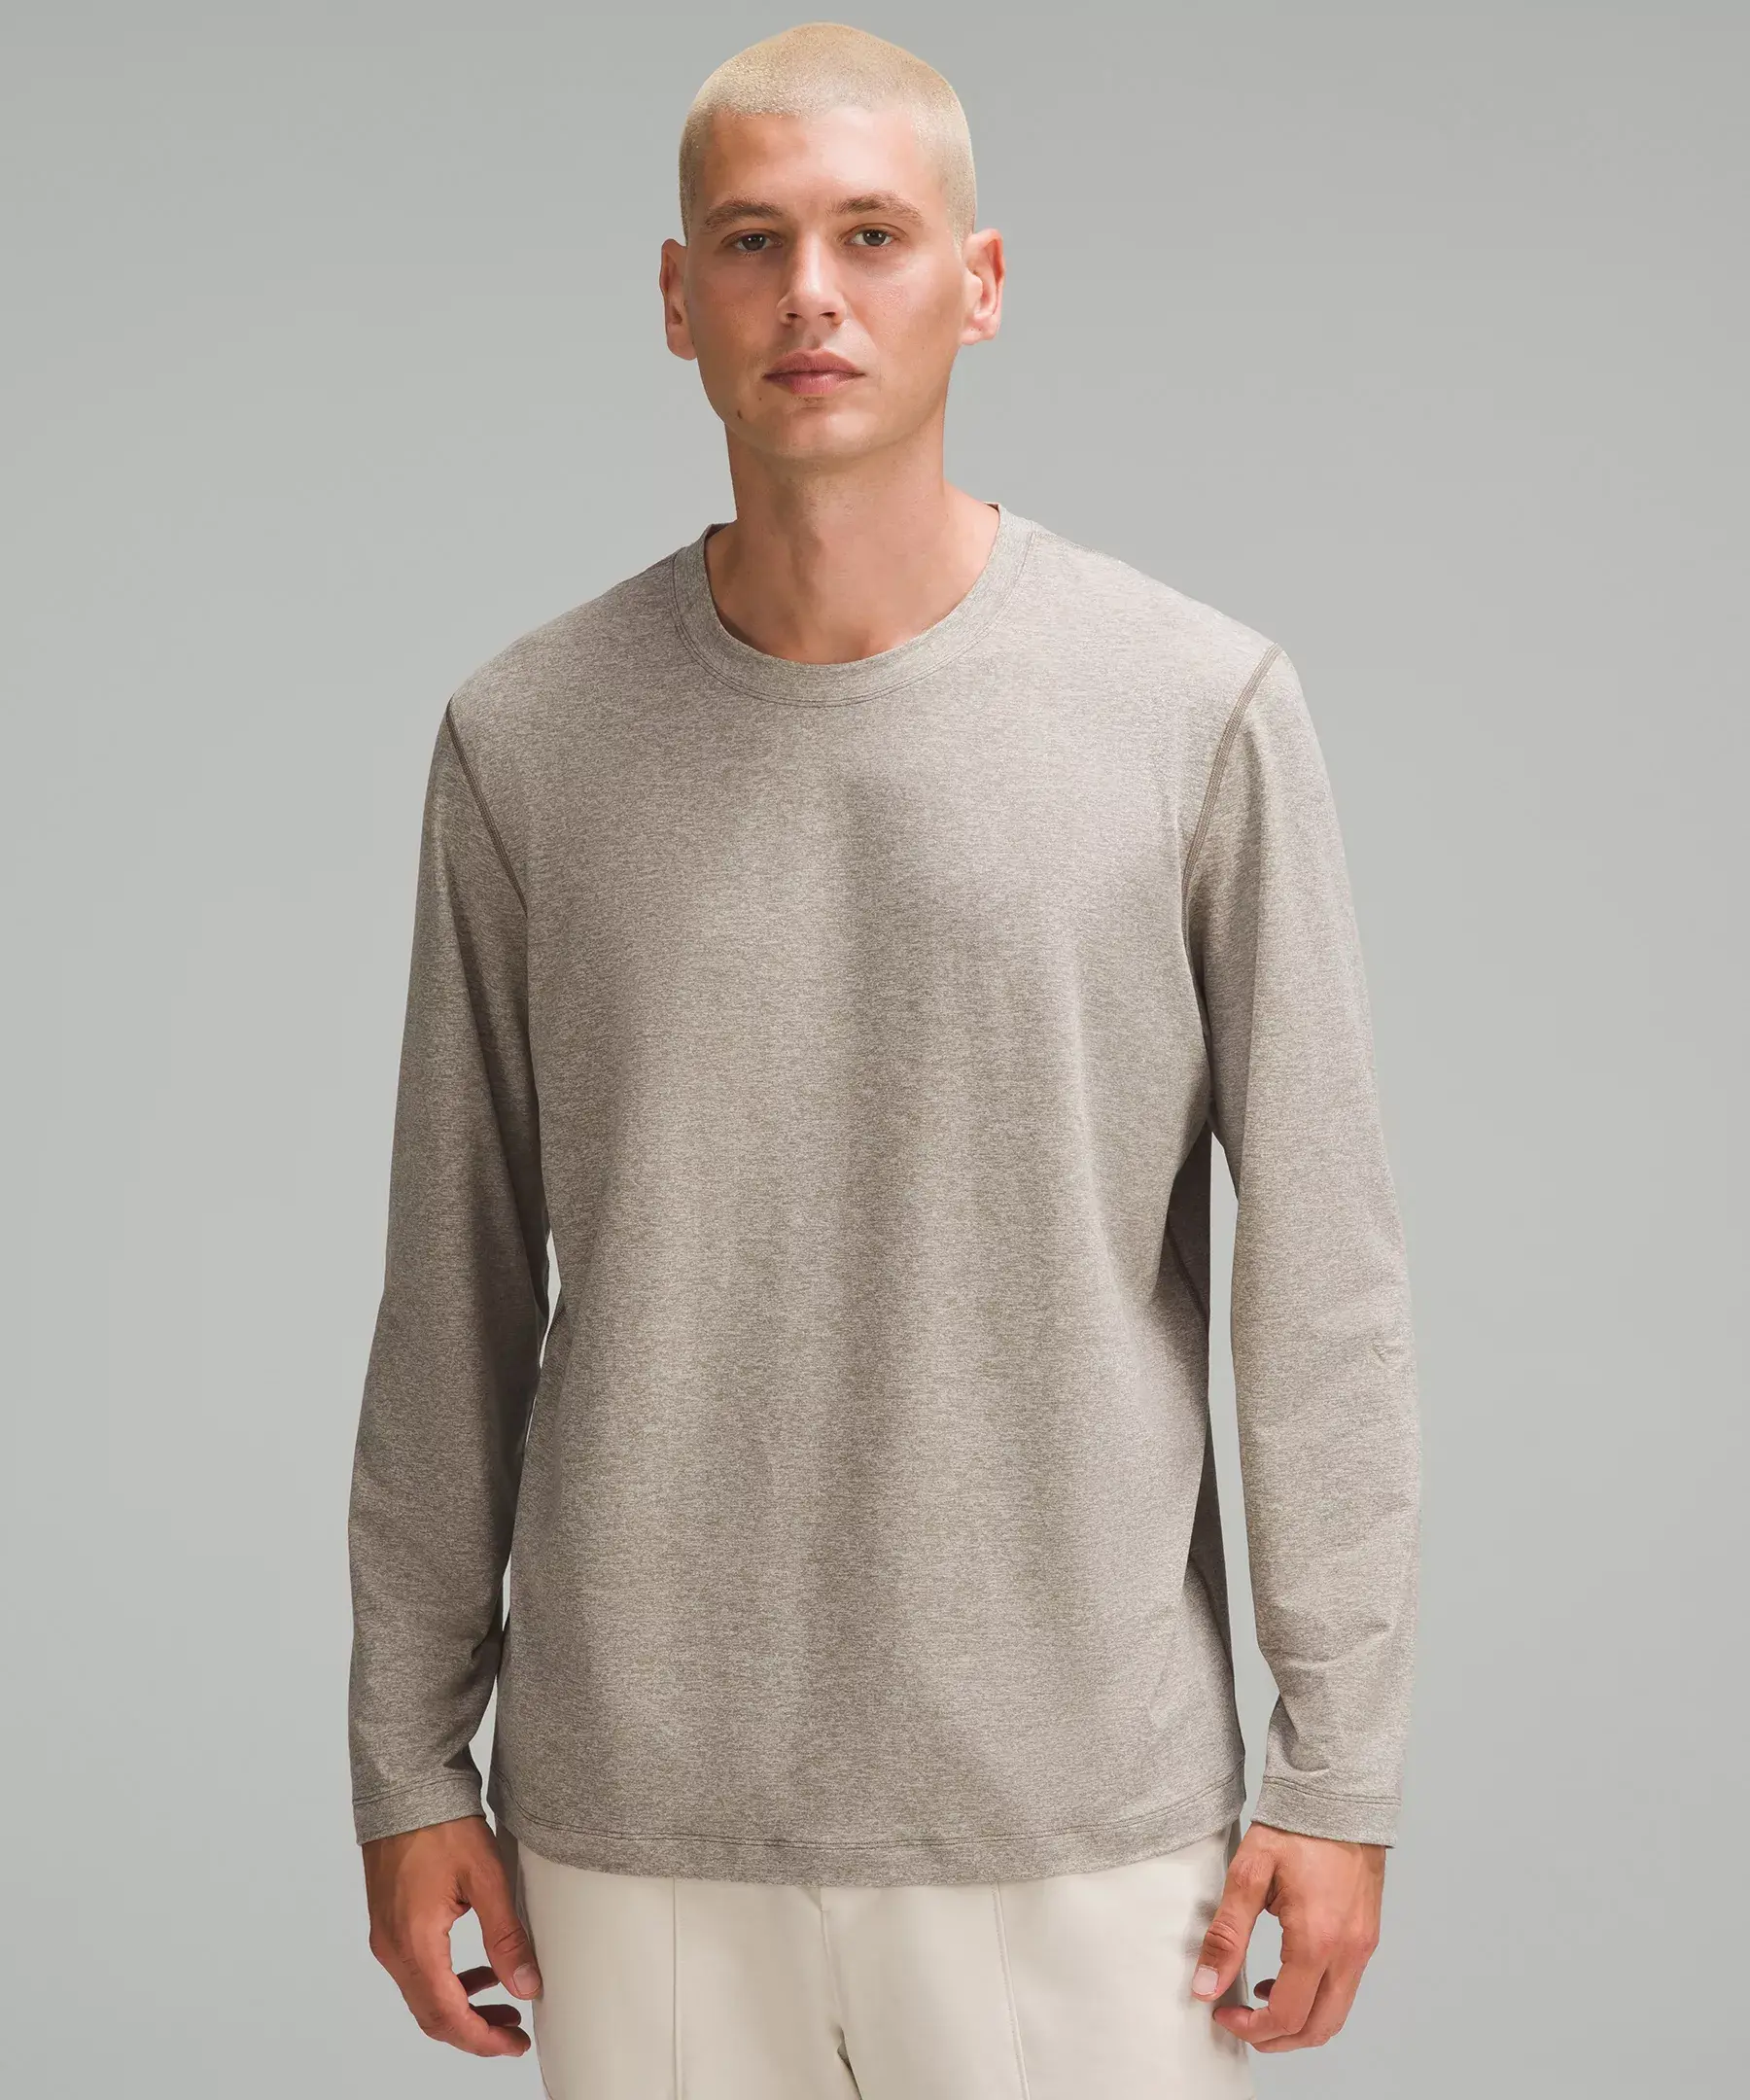 Lululemon Soft Jersey Long-Sleeve Shirt. 1